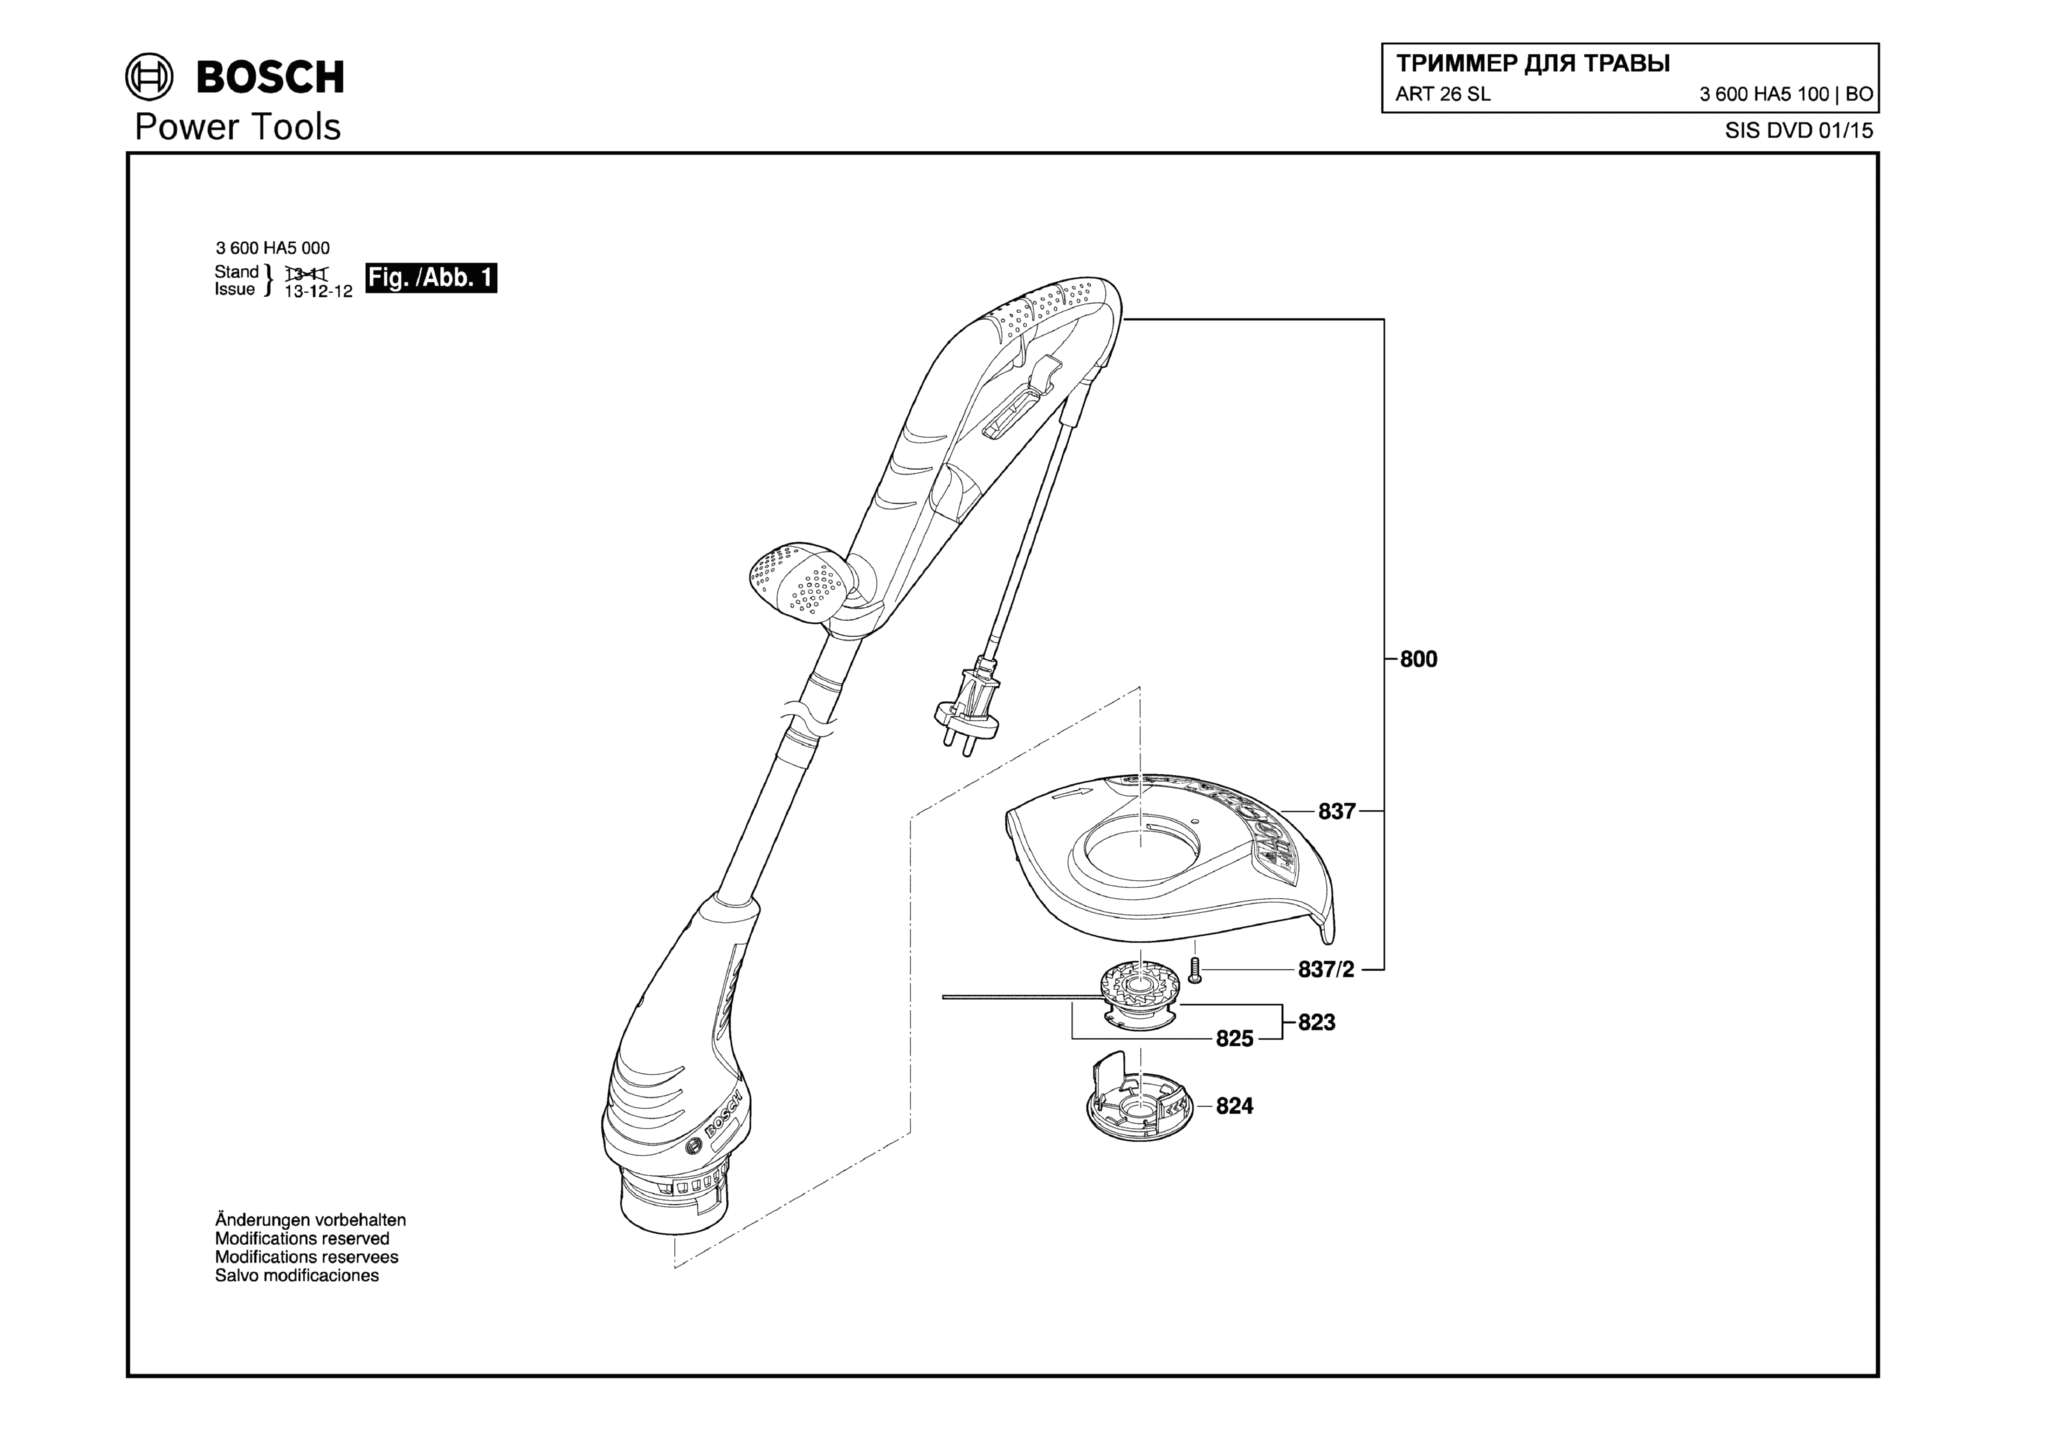 Запчасти, схема и деталировка Bosch ART 26 SL (ТИП 3600HA5100)